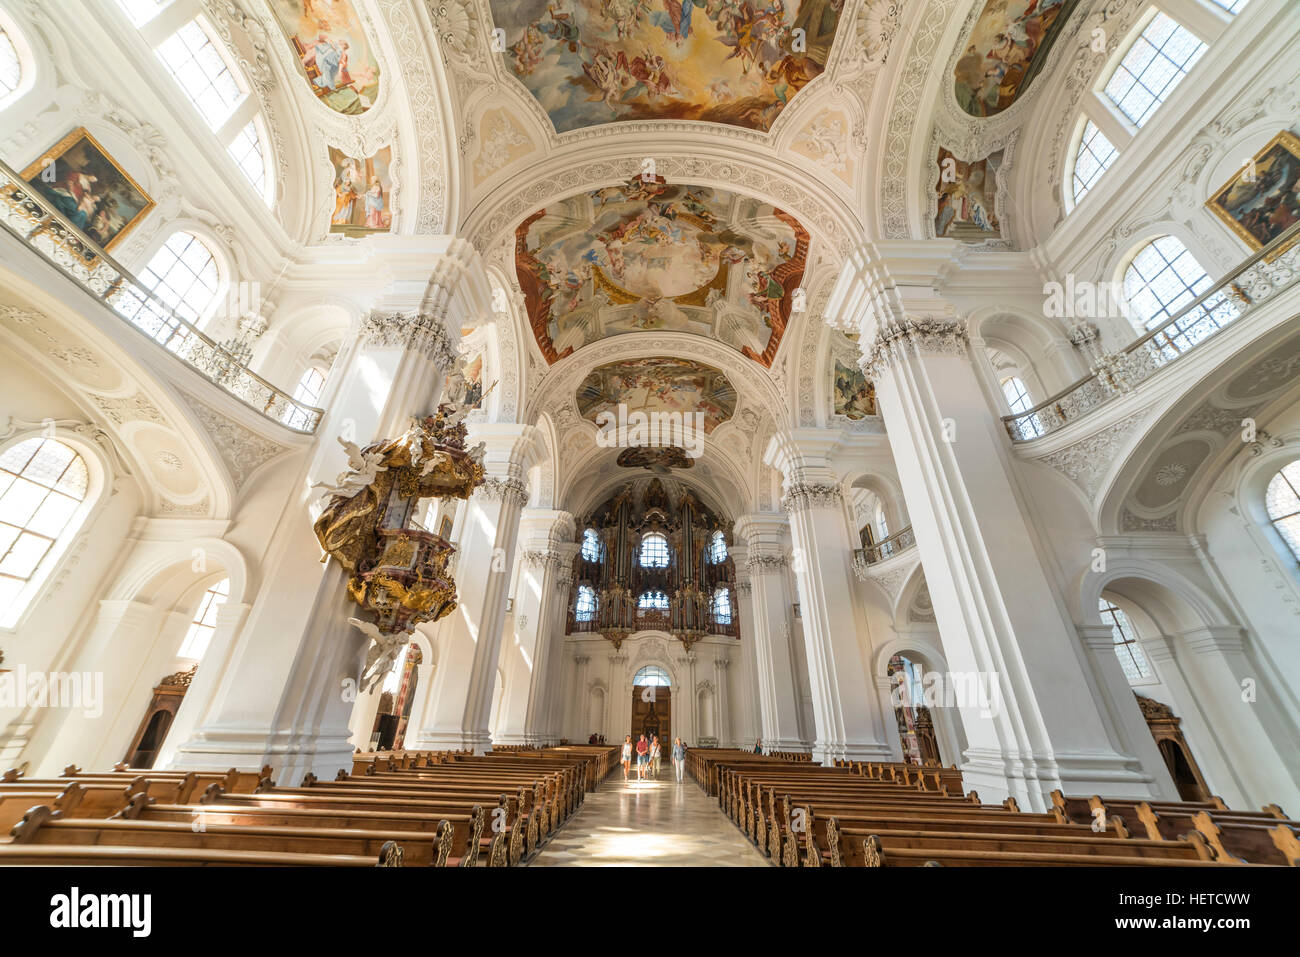 Chiesa abbaziale di San Martin e Oswald interno, Weingarten e Ravensburg distretto, Baden-Württemberg, Germania Foto Stock